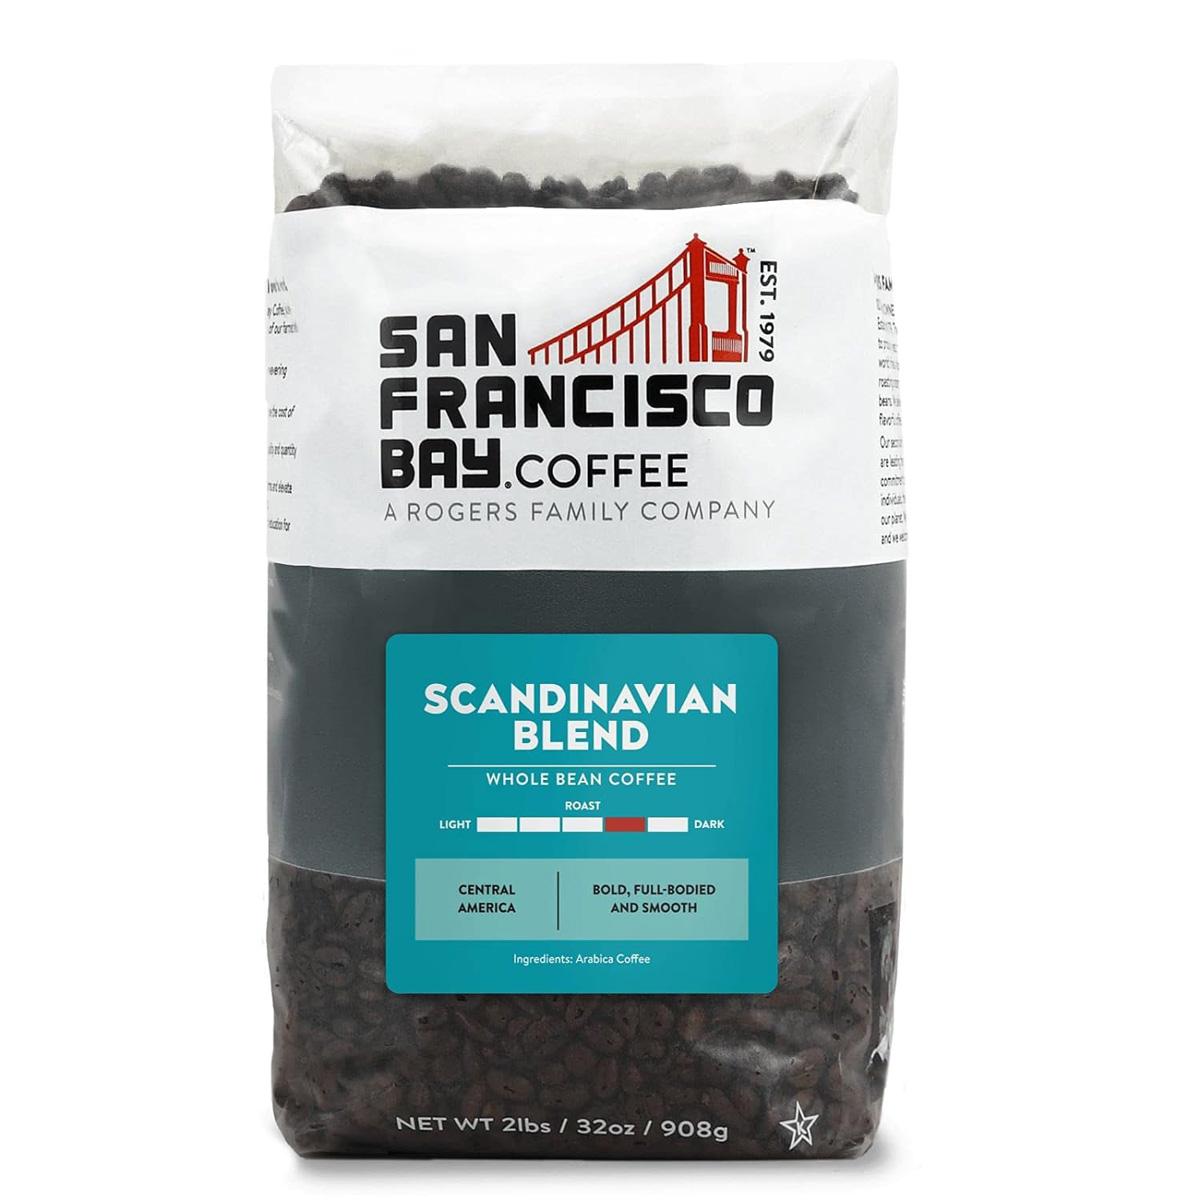 San Francisco Bay Whole Bean Coffee 2lb Bag for $14.99